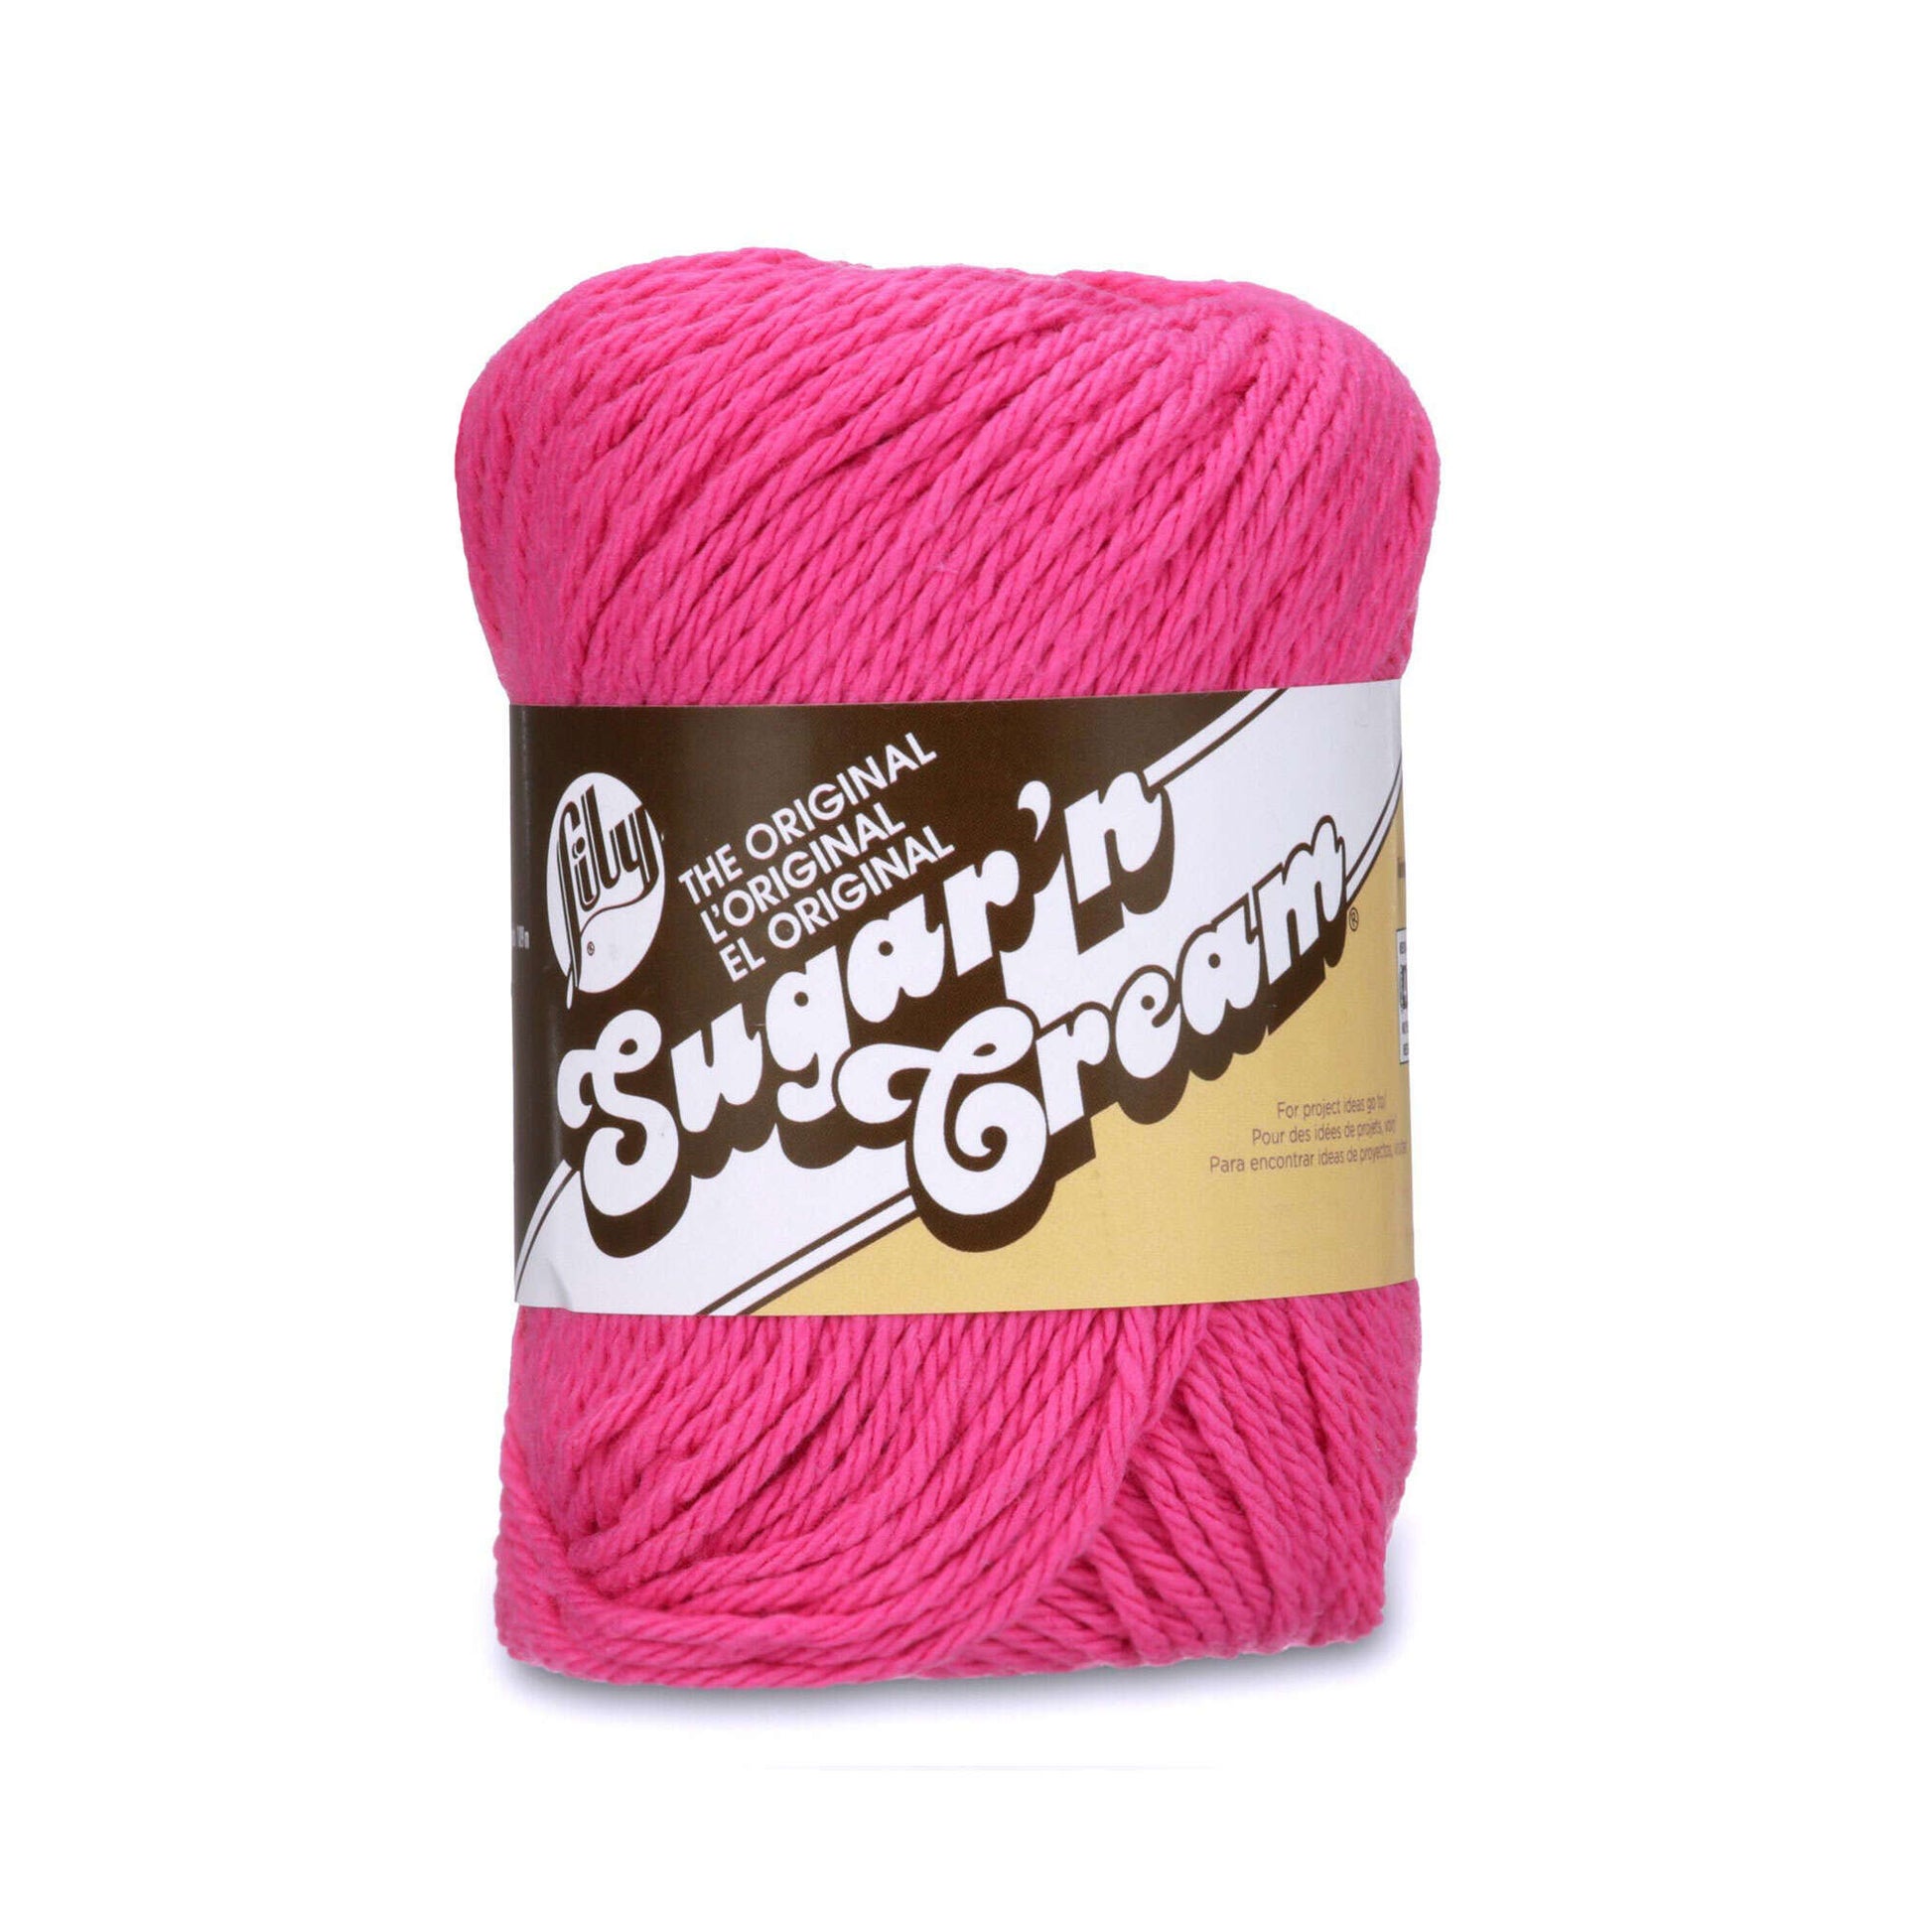 Lily Sugar 'n Cream Cotton Yarn Light Blue 00026 Crochet Knit Fast Shipping